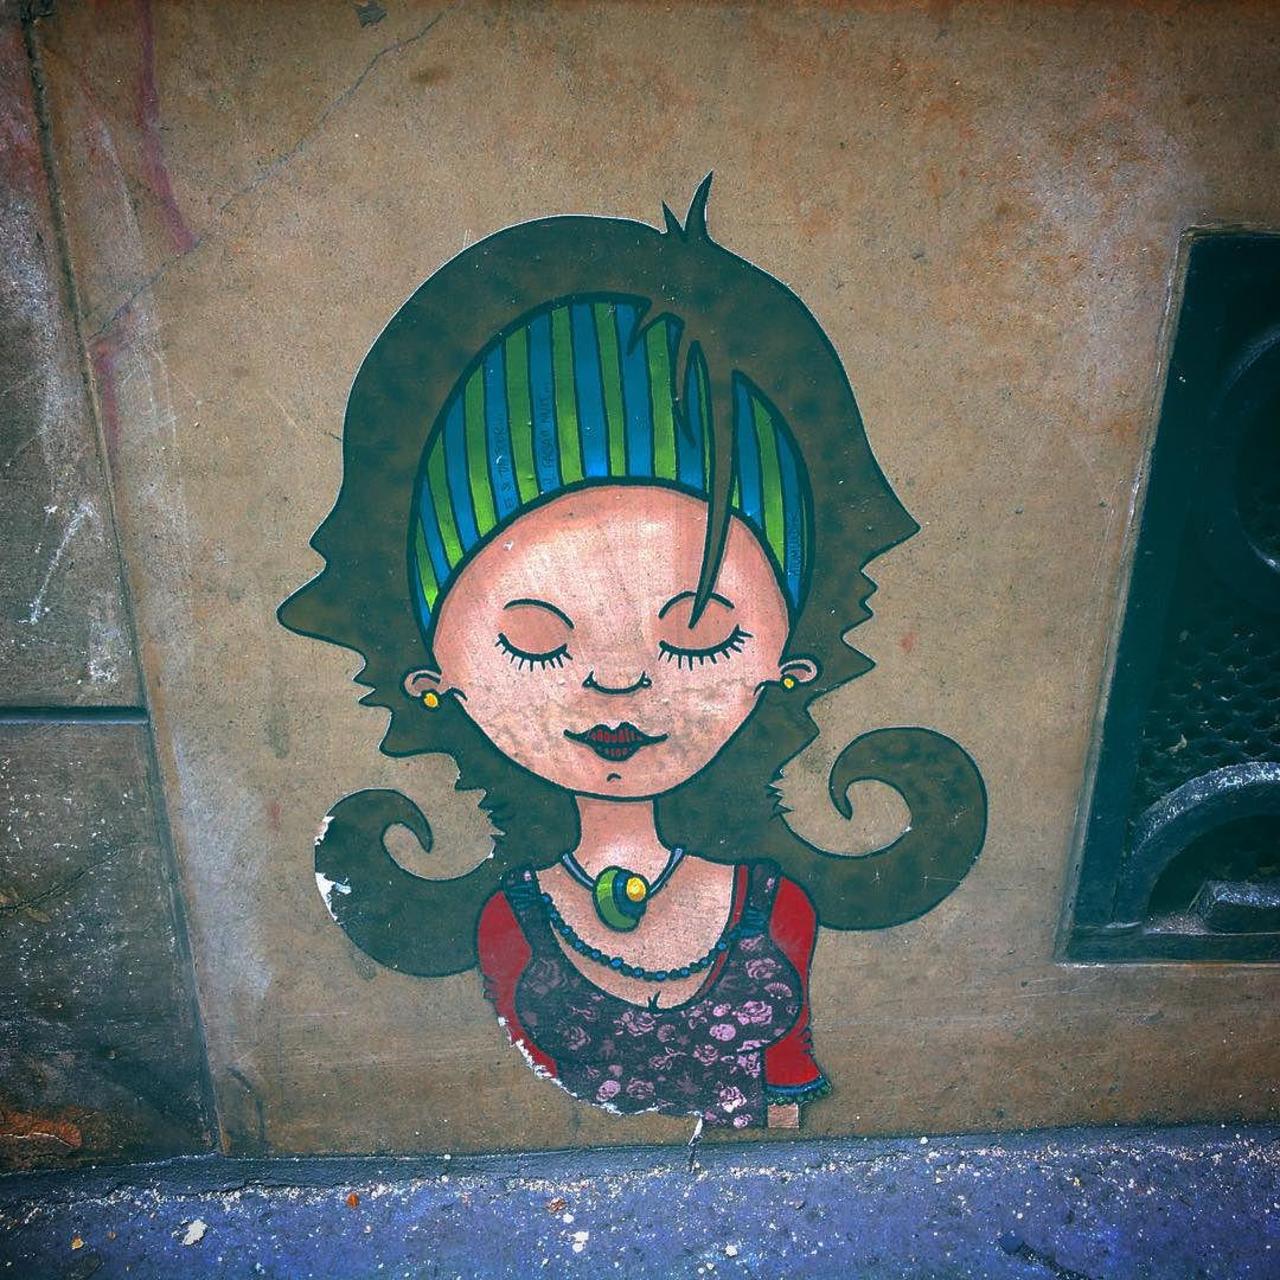 circumjacent_fr: #Paris #graffiti photo by stefetlinda http://ift.tt/1OzPuL7 #StreetArt http://t.co/1bikwbQtWY